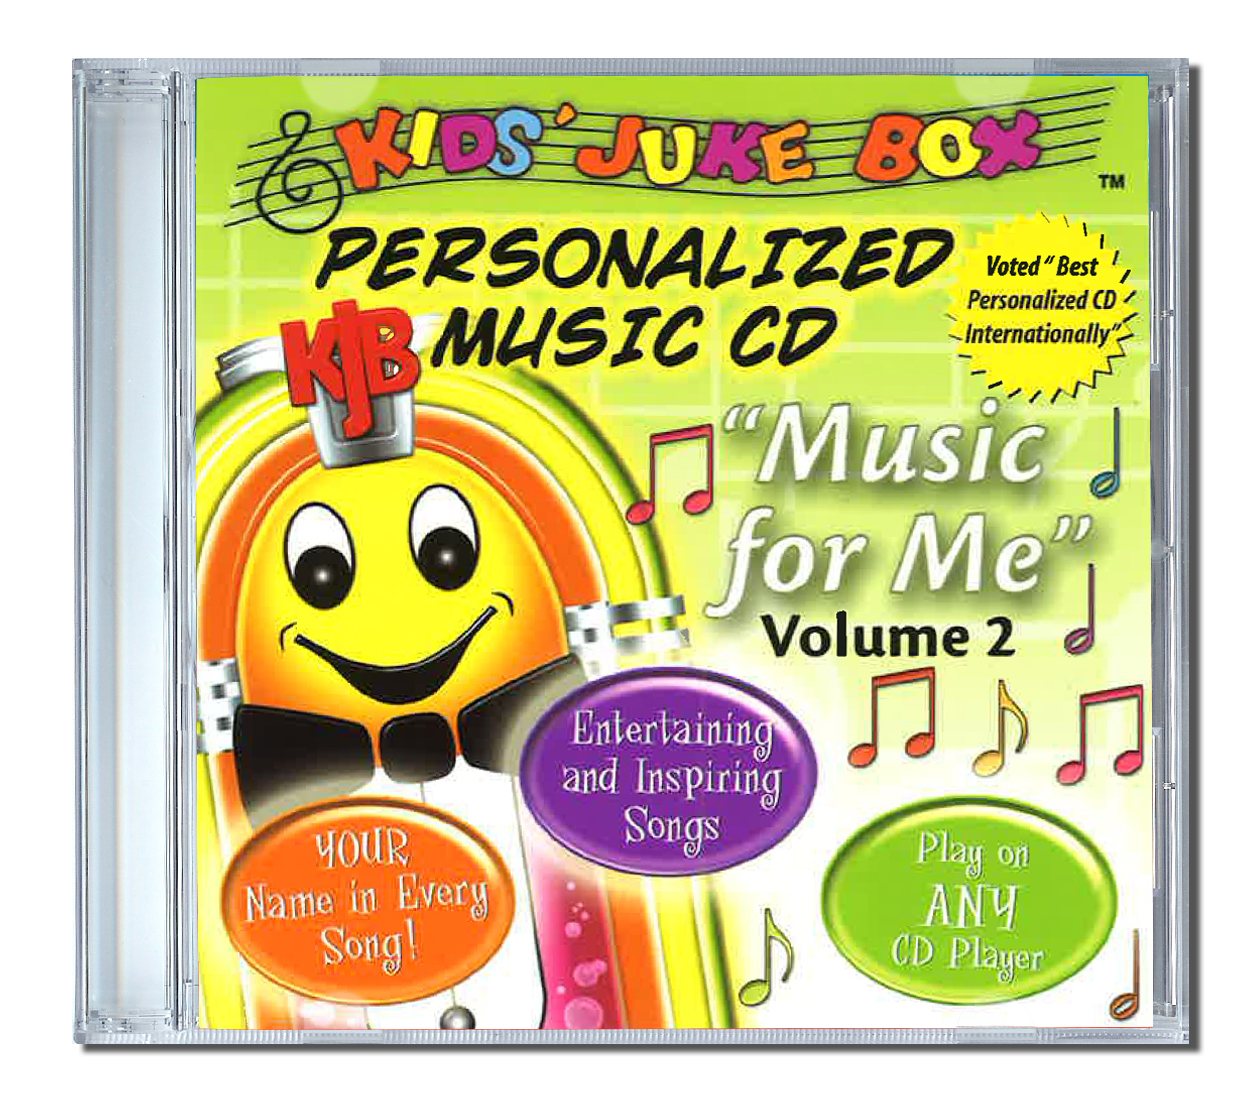 Music for me volume 2